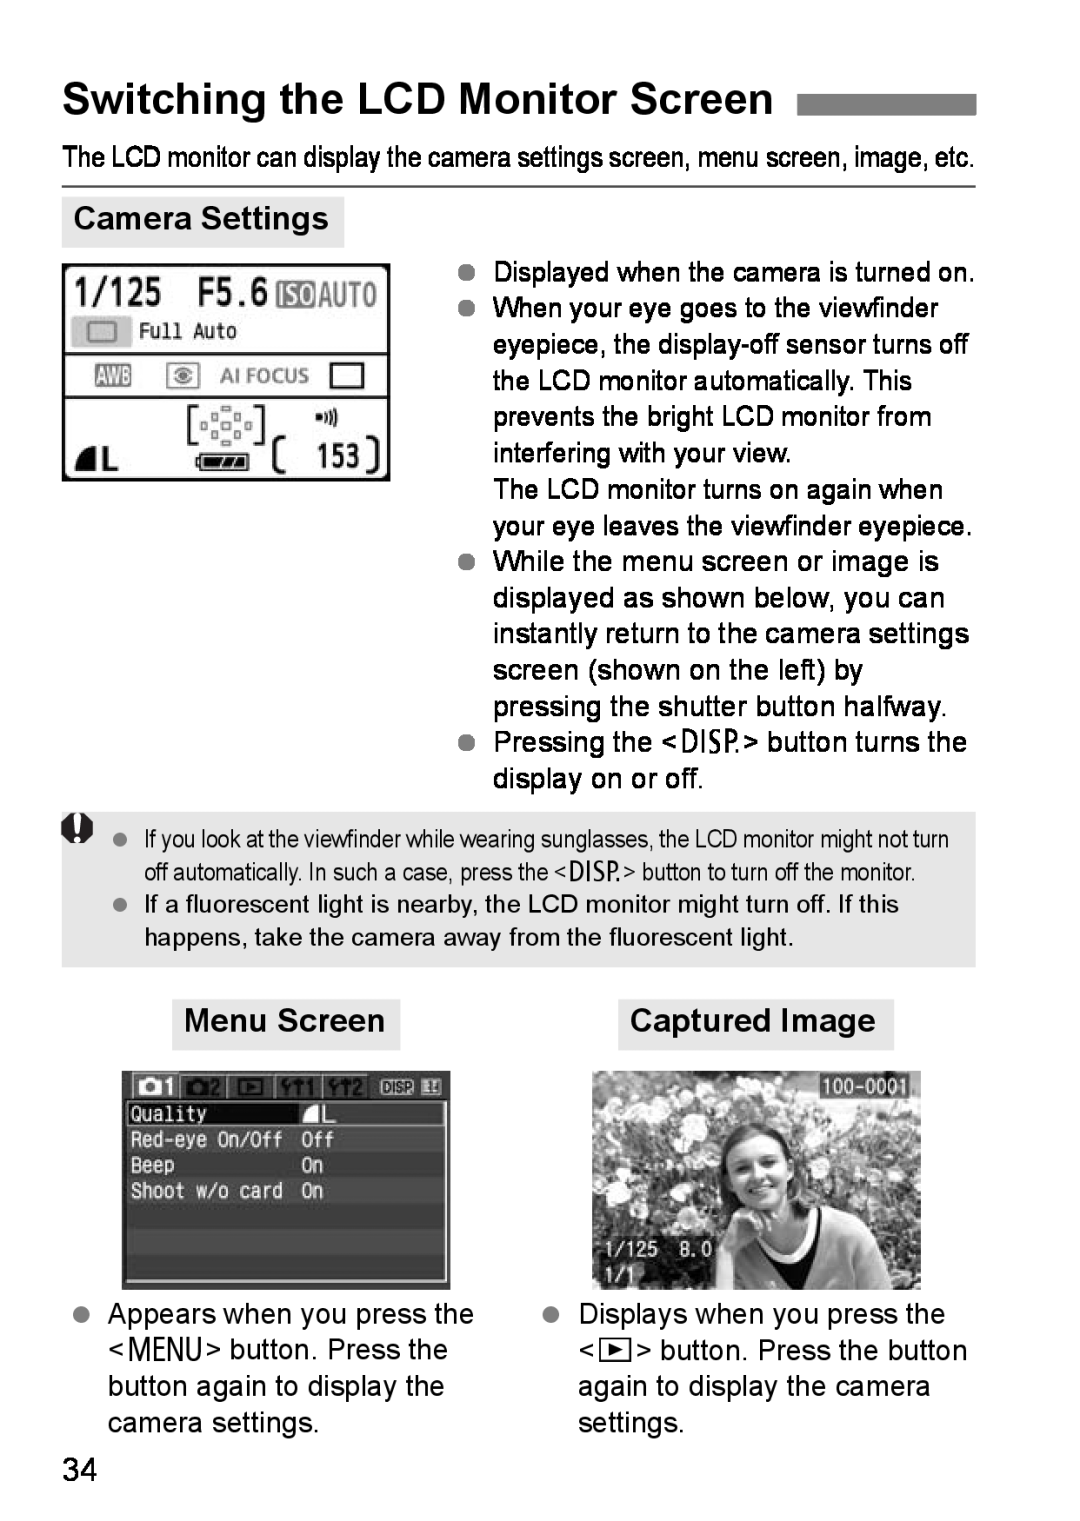 Canon EOS DIGITAL REBEL XTI Switching the LCD Monitor Screen, Camera Settings, Menu Screen, Captured Image 